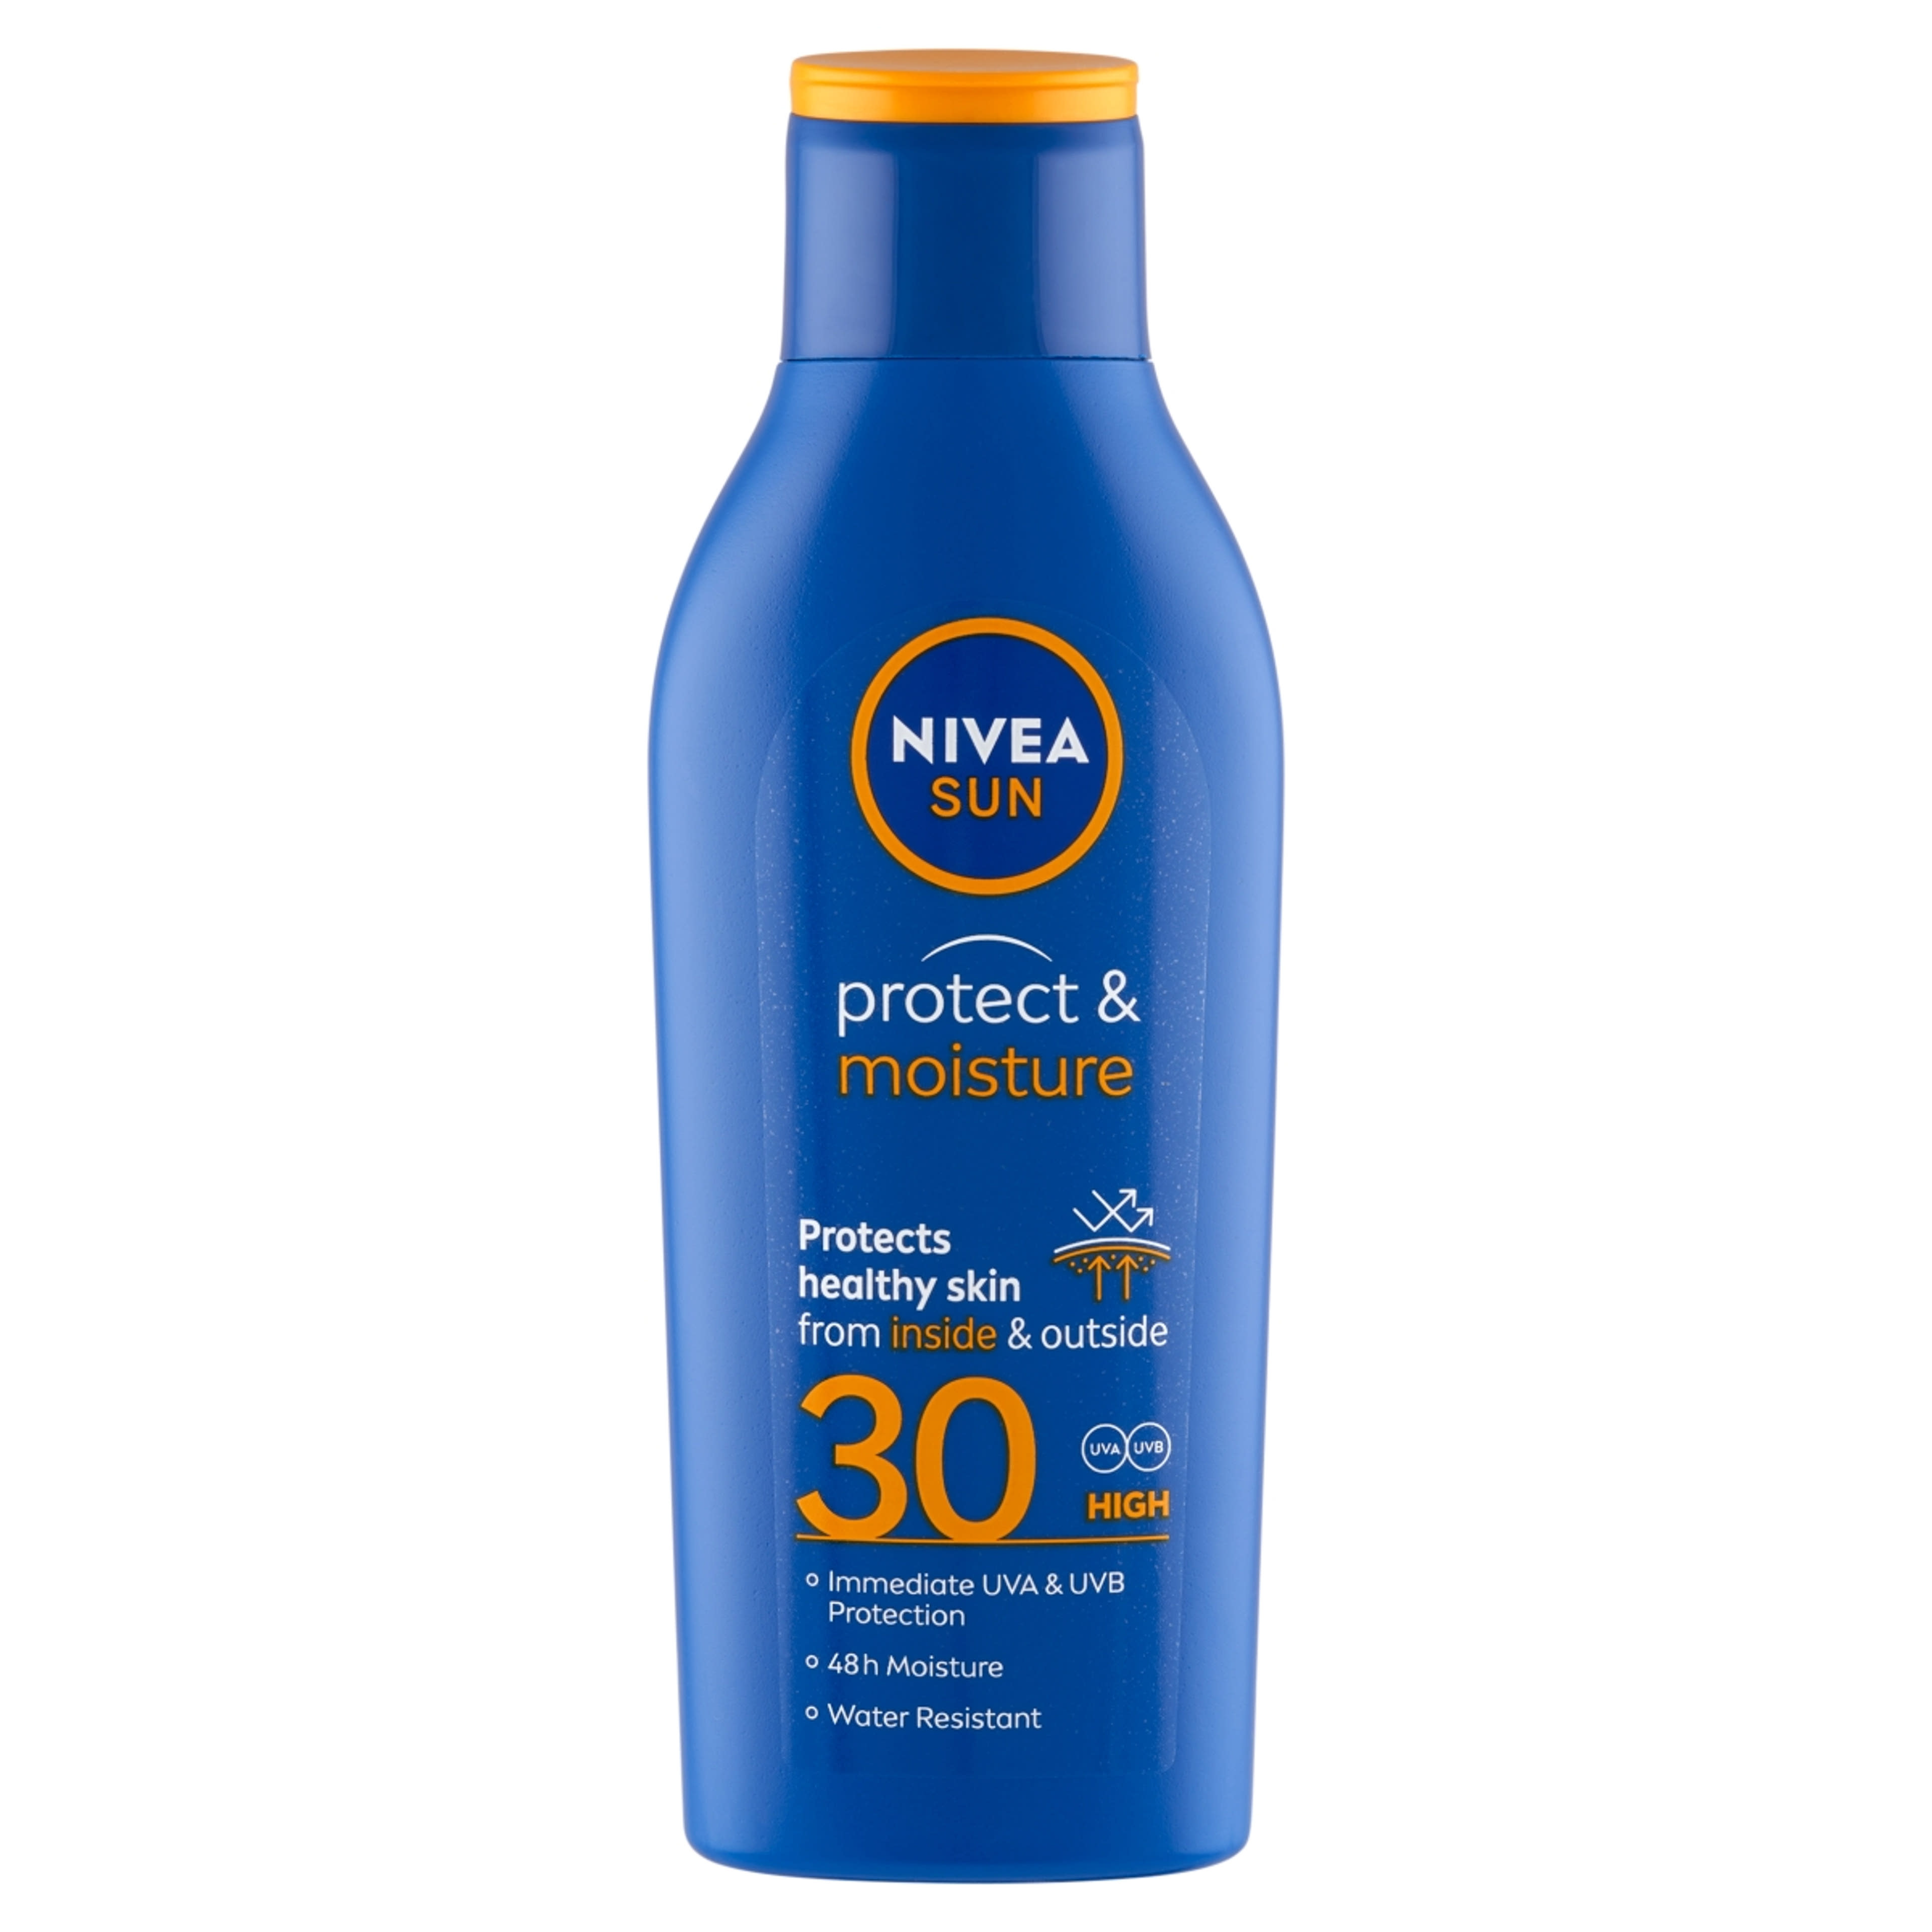 NIVEA SUN Protect & Moisture naptej FF30 - 200 ml-1